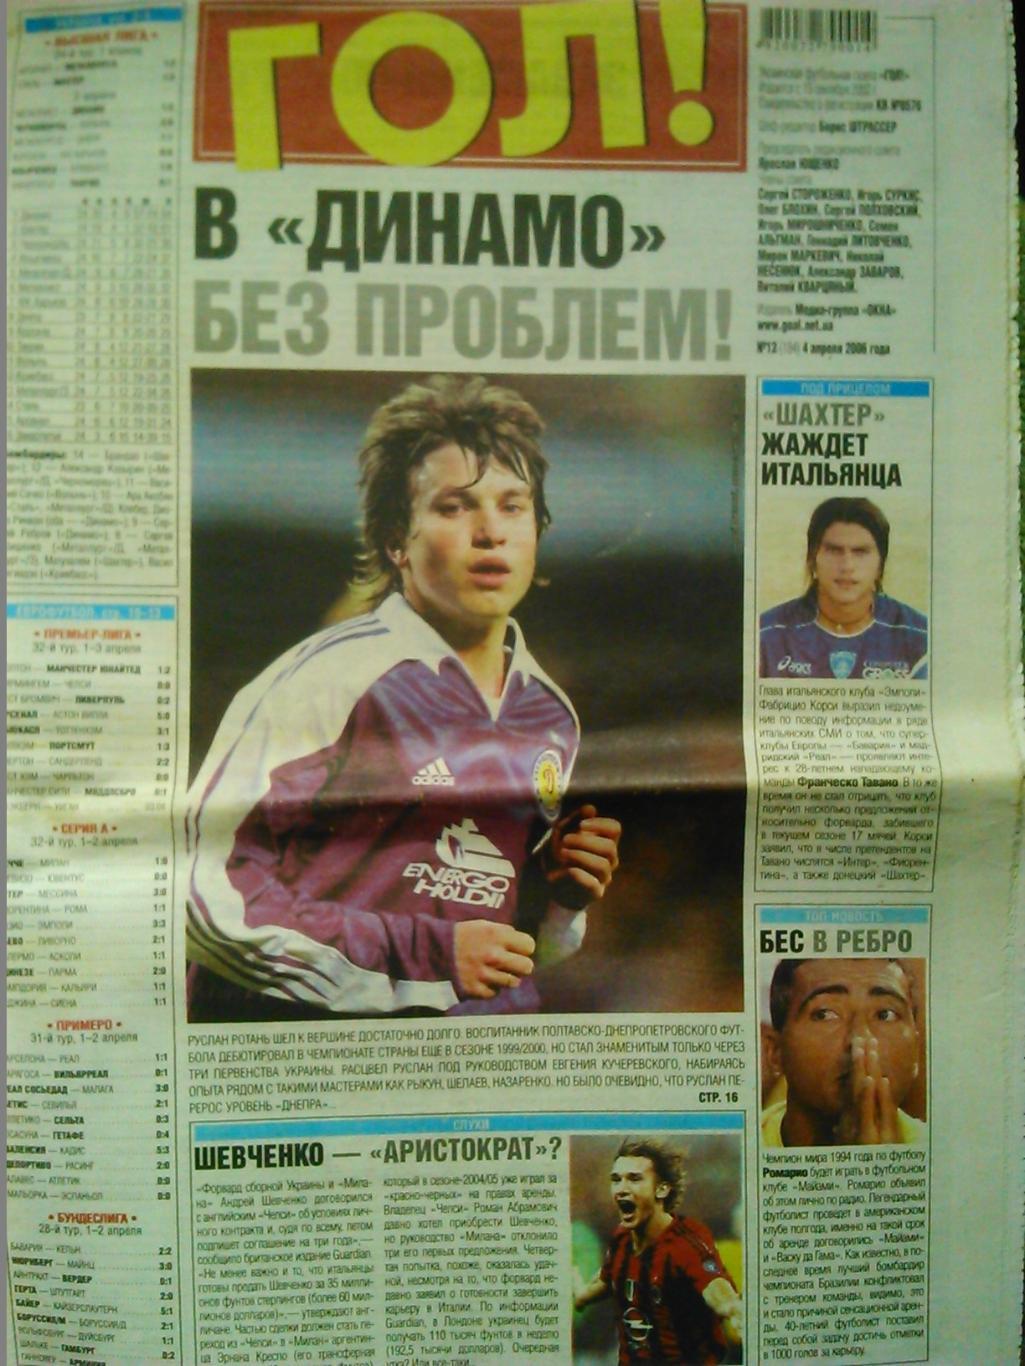 ГОЛ! №12(184) 2006. спорт газета. Оптом скидки до 45%!